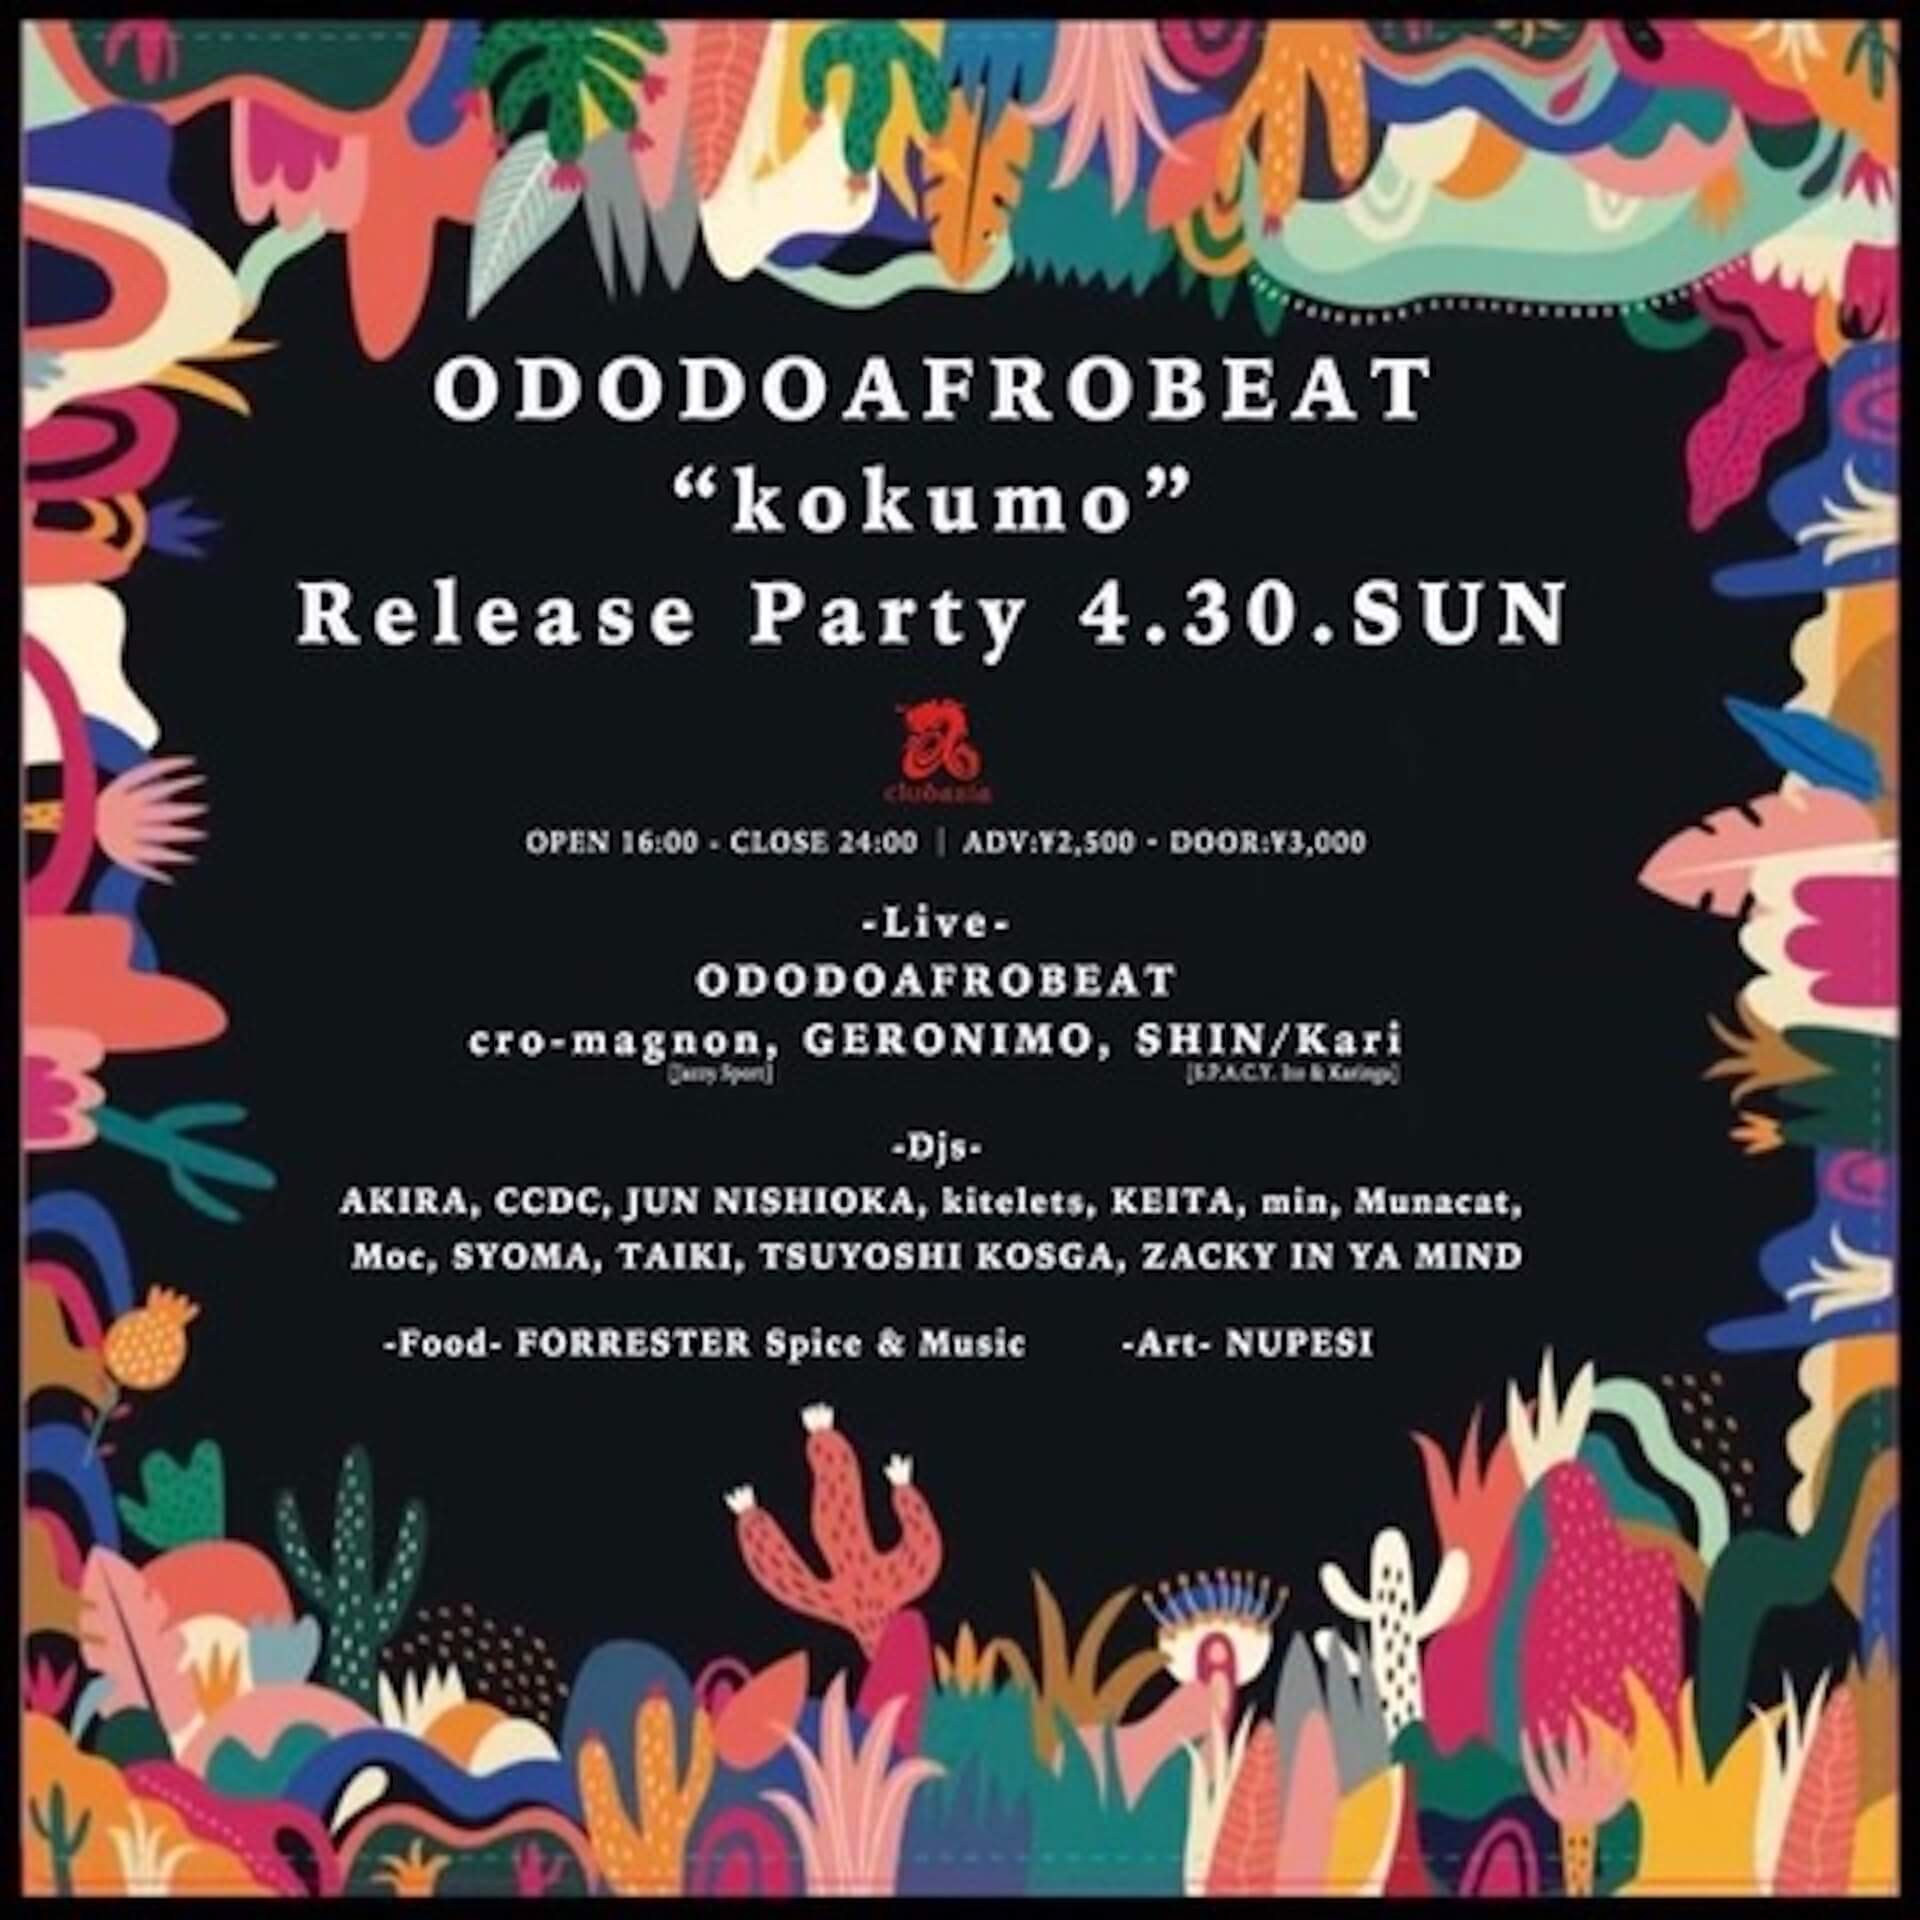 KOYOsax率いるアフロビートバンド・ODODOAFROBEAT、12インチの発売を記念したパーティーを開催｜cro-magnon、geronimoと対バン music230428-ododoafrobeat4